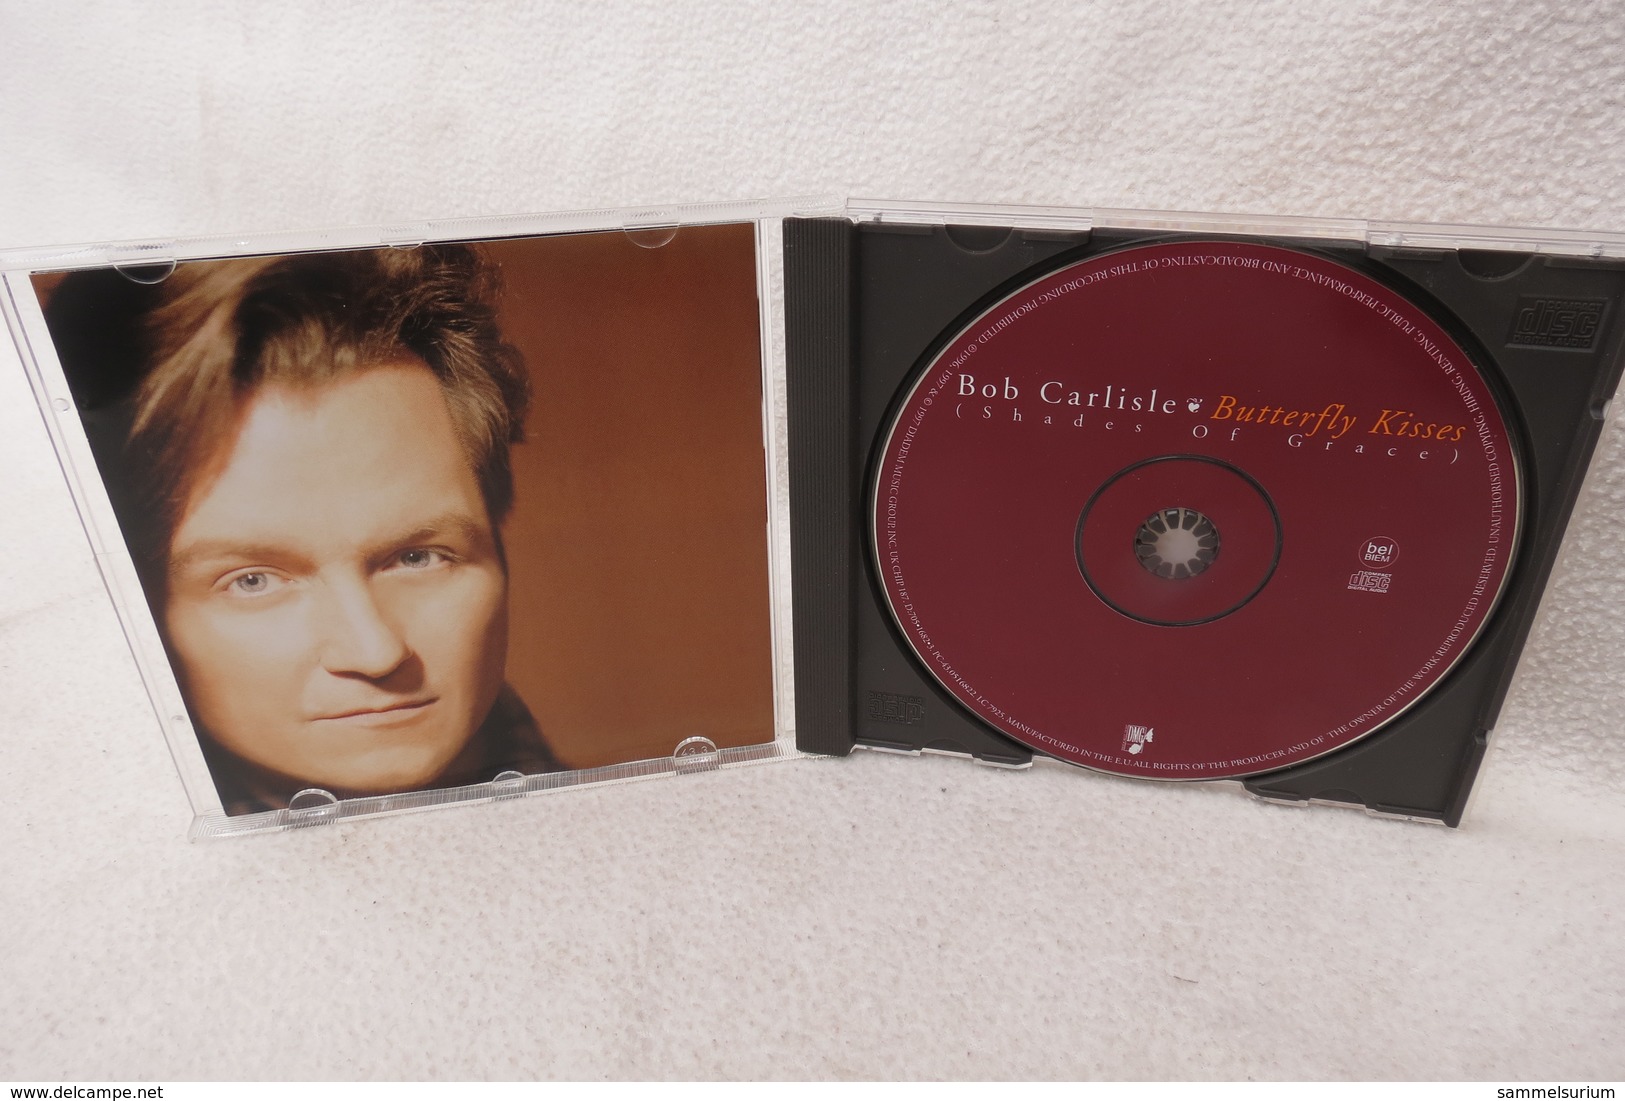 CD "Bob Carlisle" Butterfly Kisses (Shades Of Grace) - Gospel & Religiöser Gesang